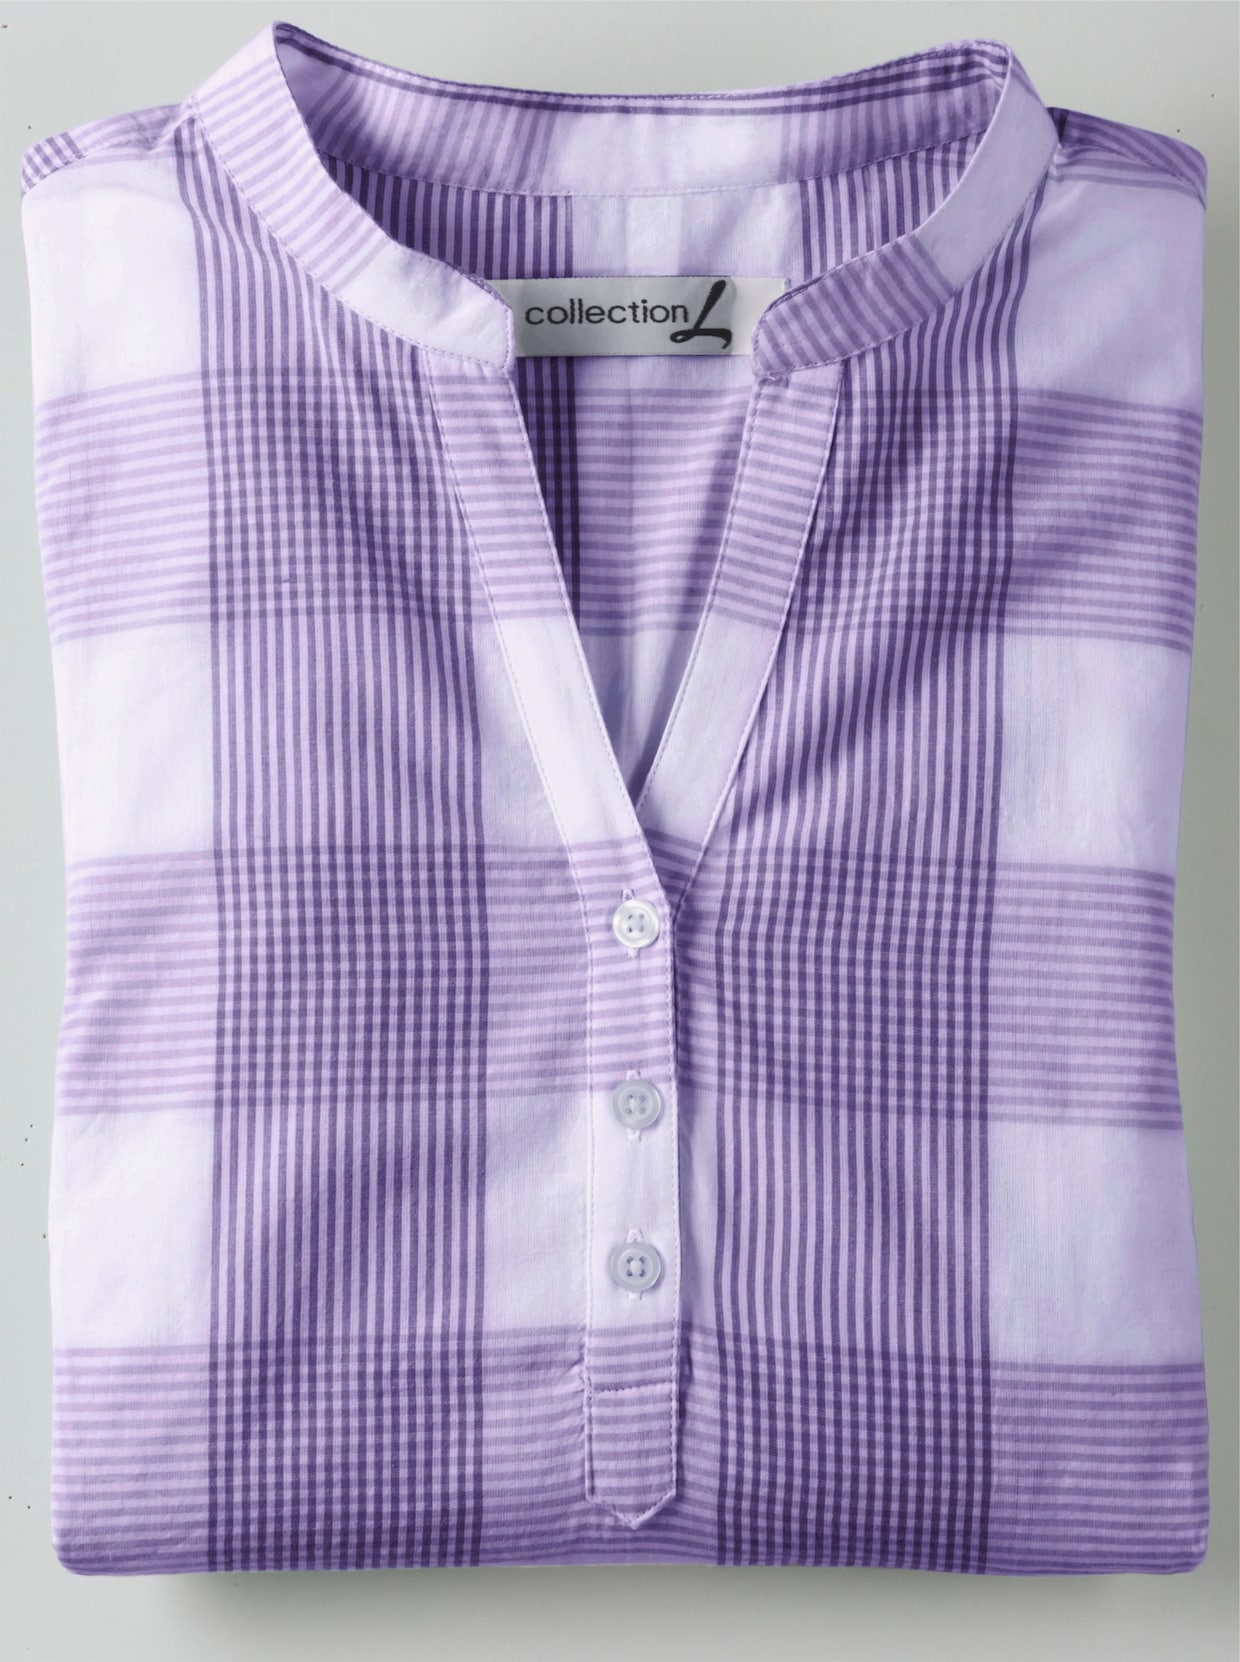 Katoenen blouse - lavendel/wit geruit